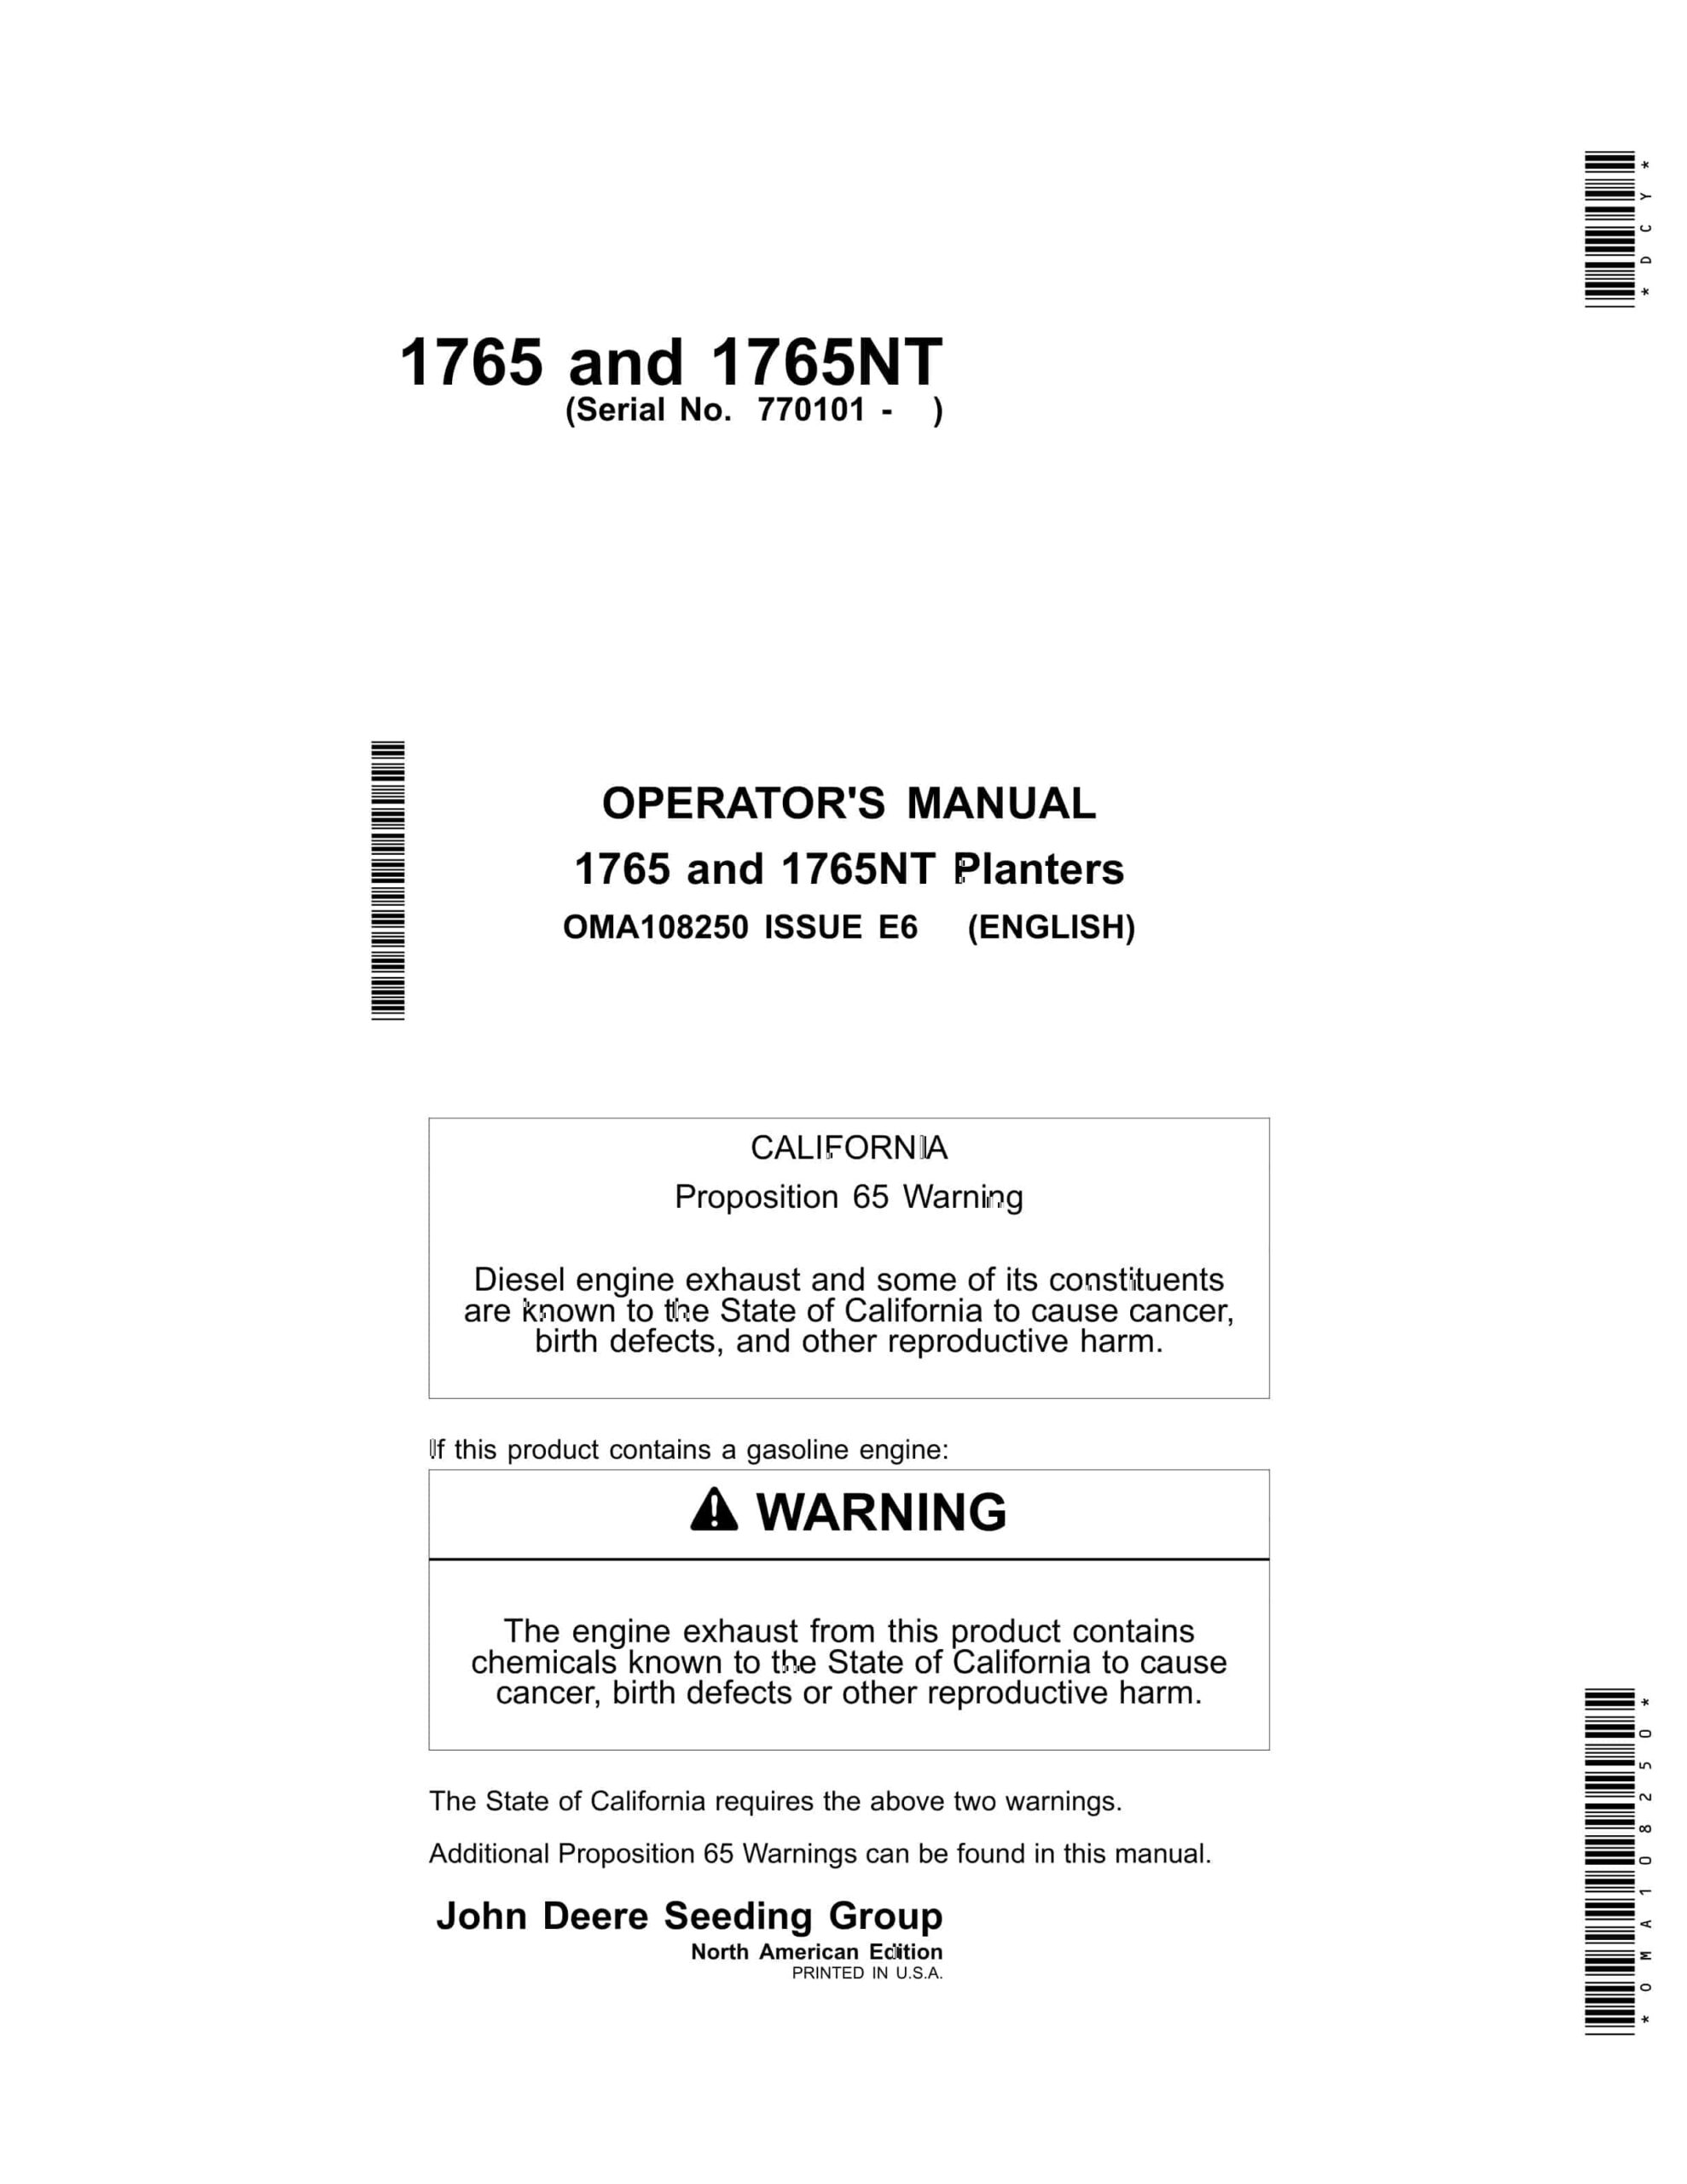 John Deere 1765 and 1765NT Planter Operator Manual OMA108250-1